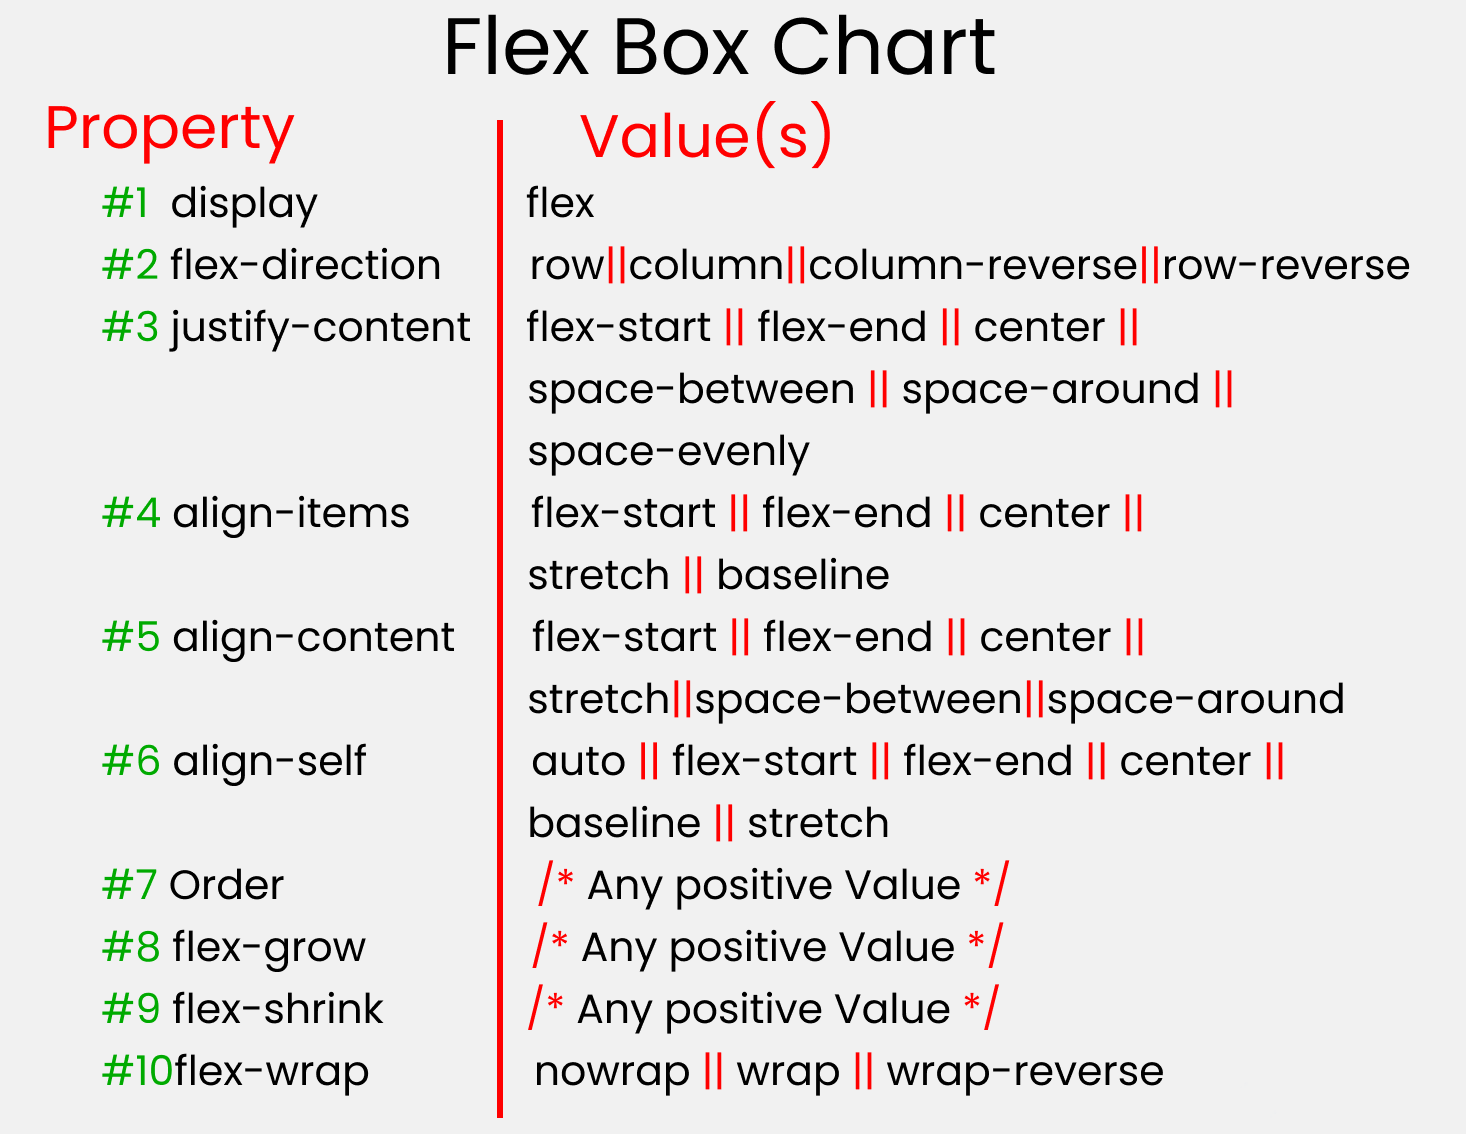 flexbox-chart.png